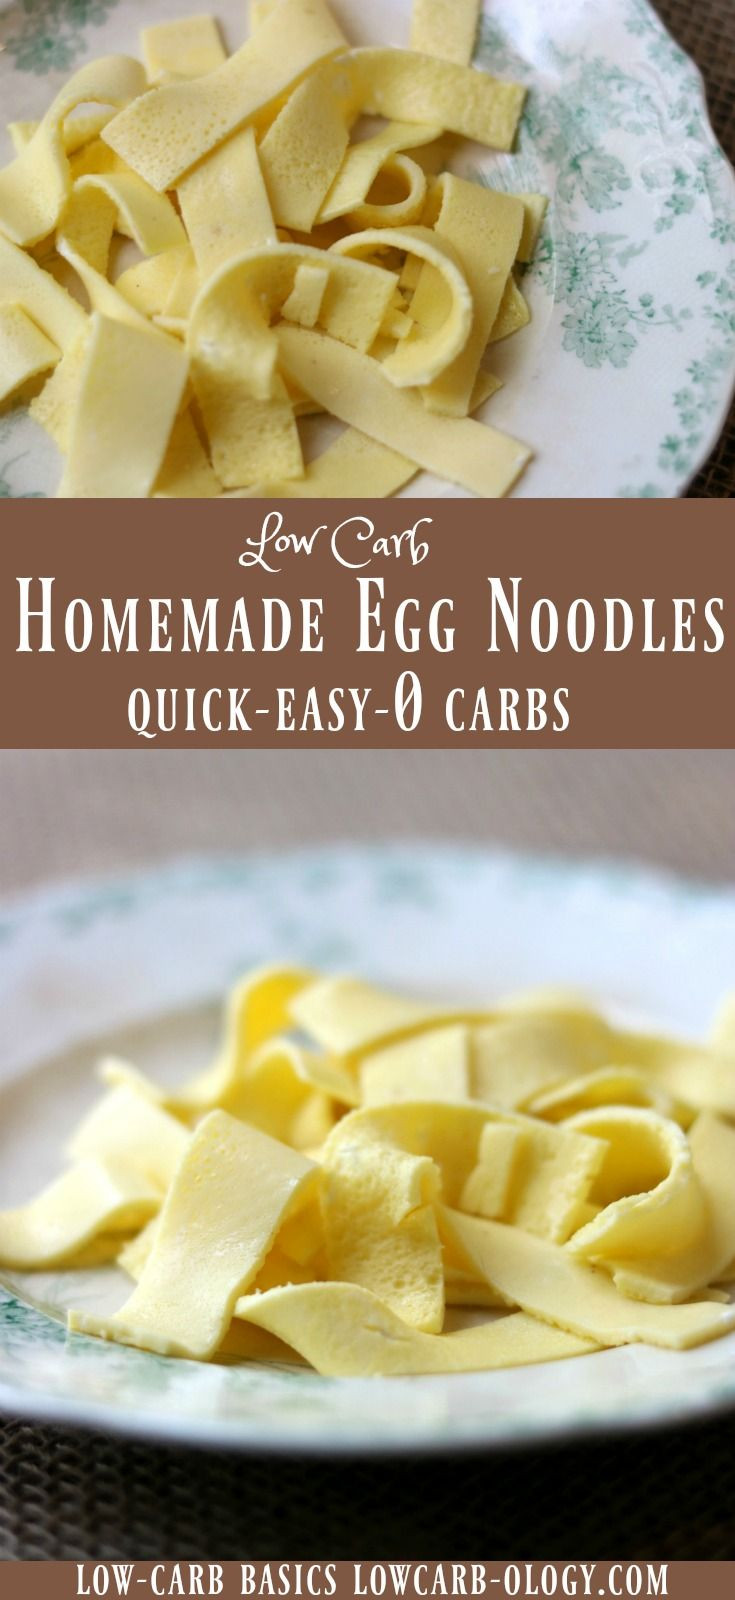 Our 15 Egg Noodles Carbs
 Ever